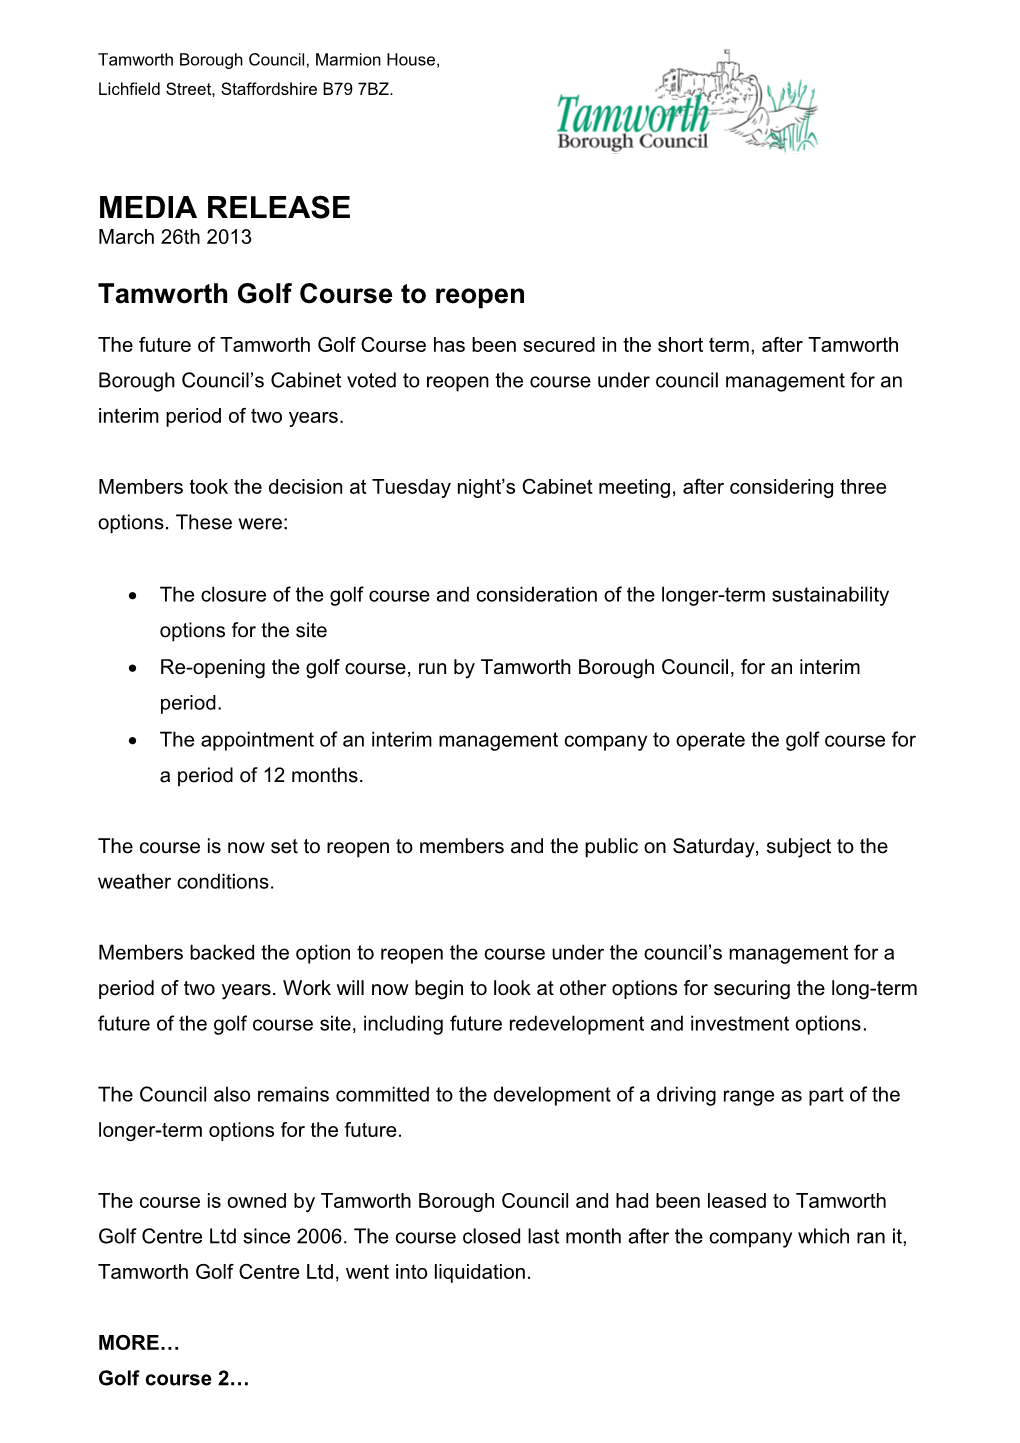 Tamworth Golf Courseto Reopen